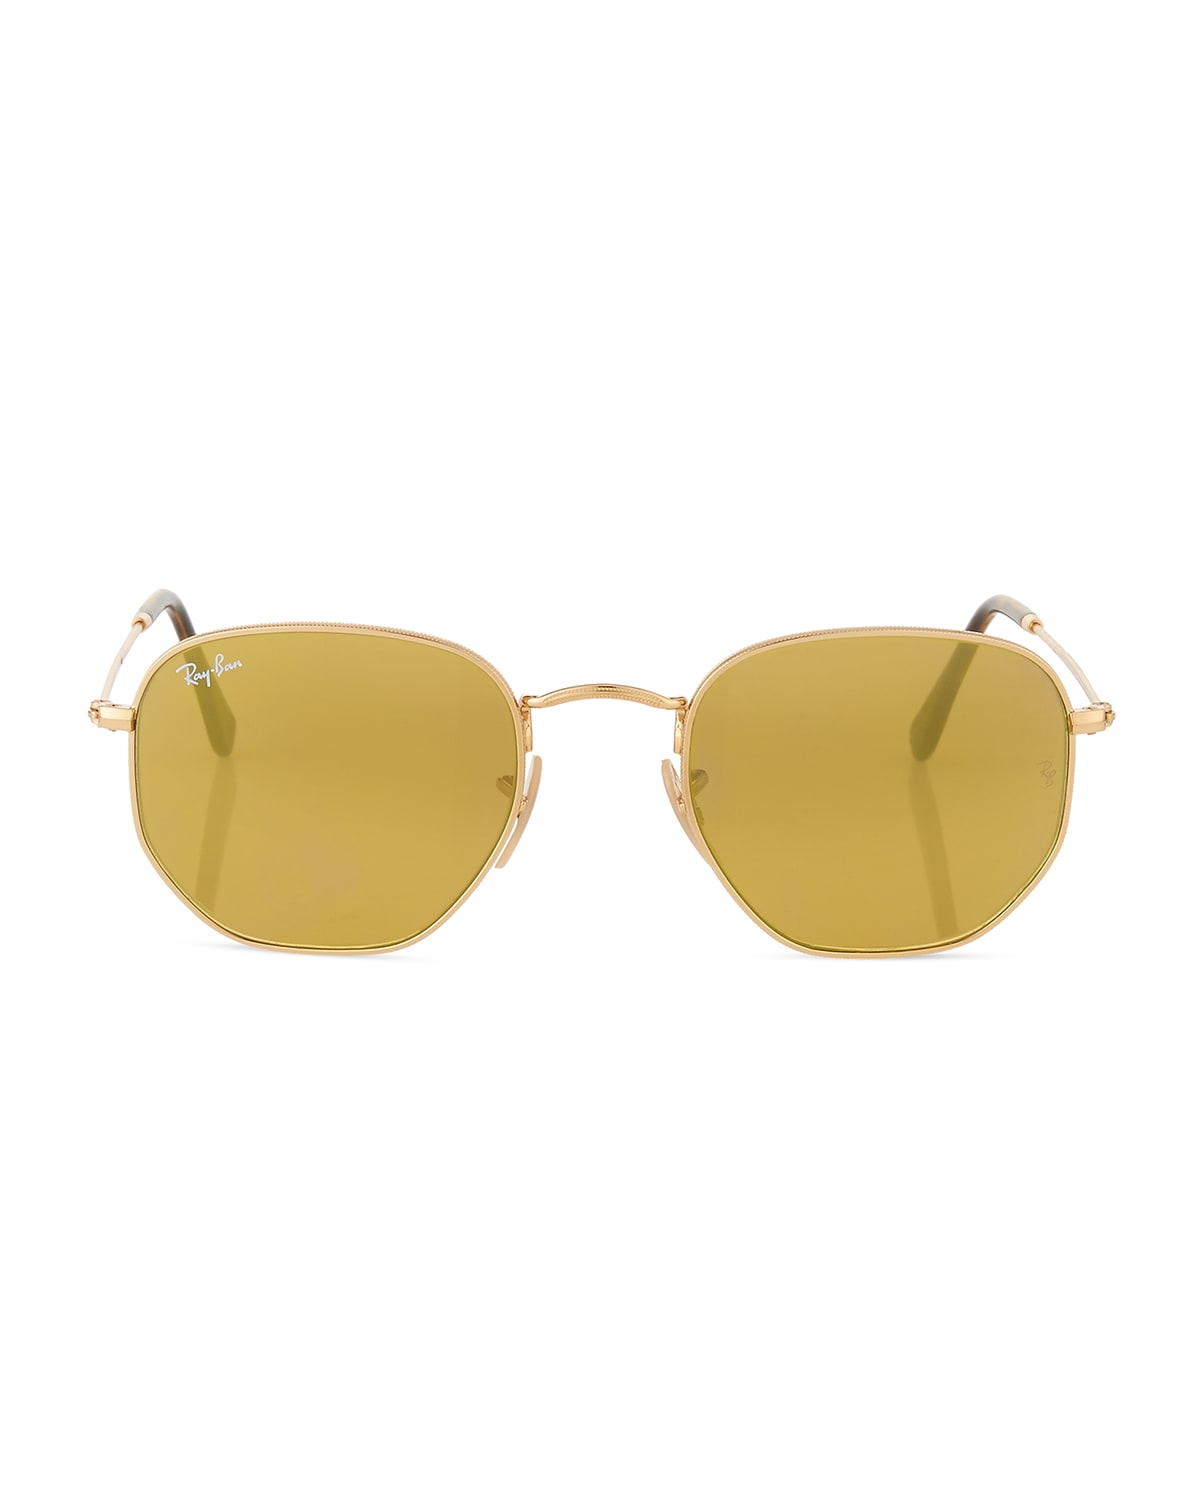 Icons Hexagonal Sunglasses, Gold/Green